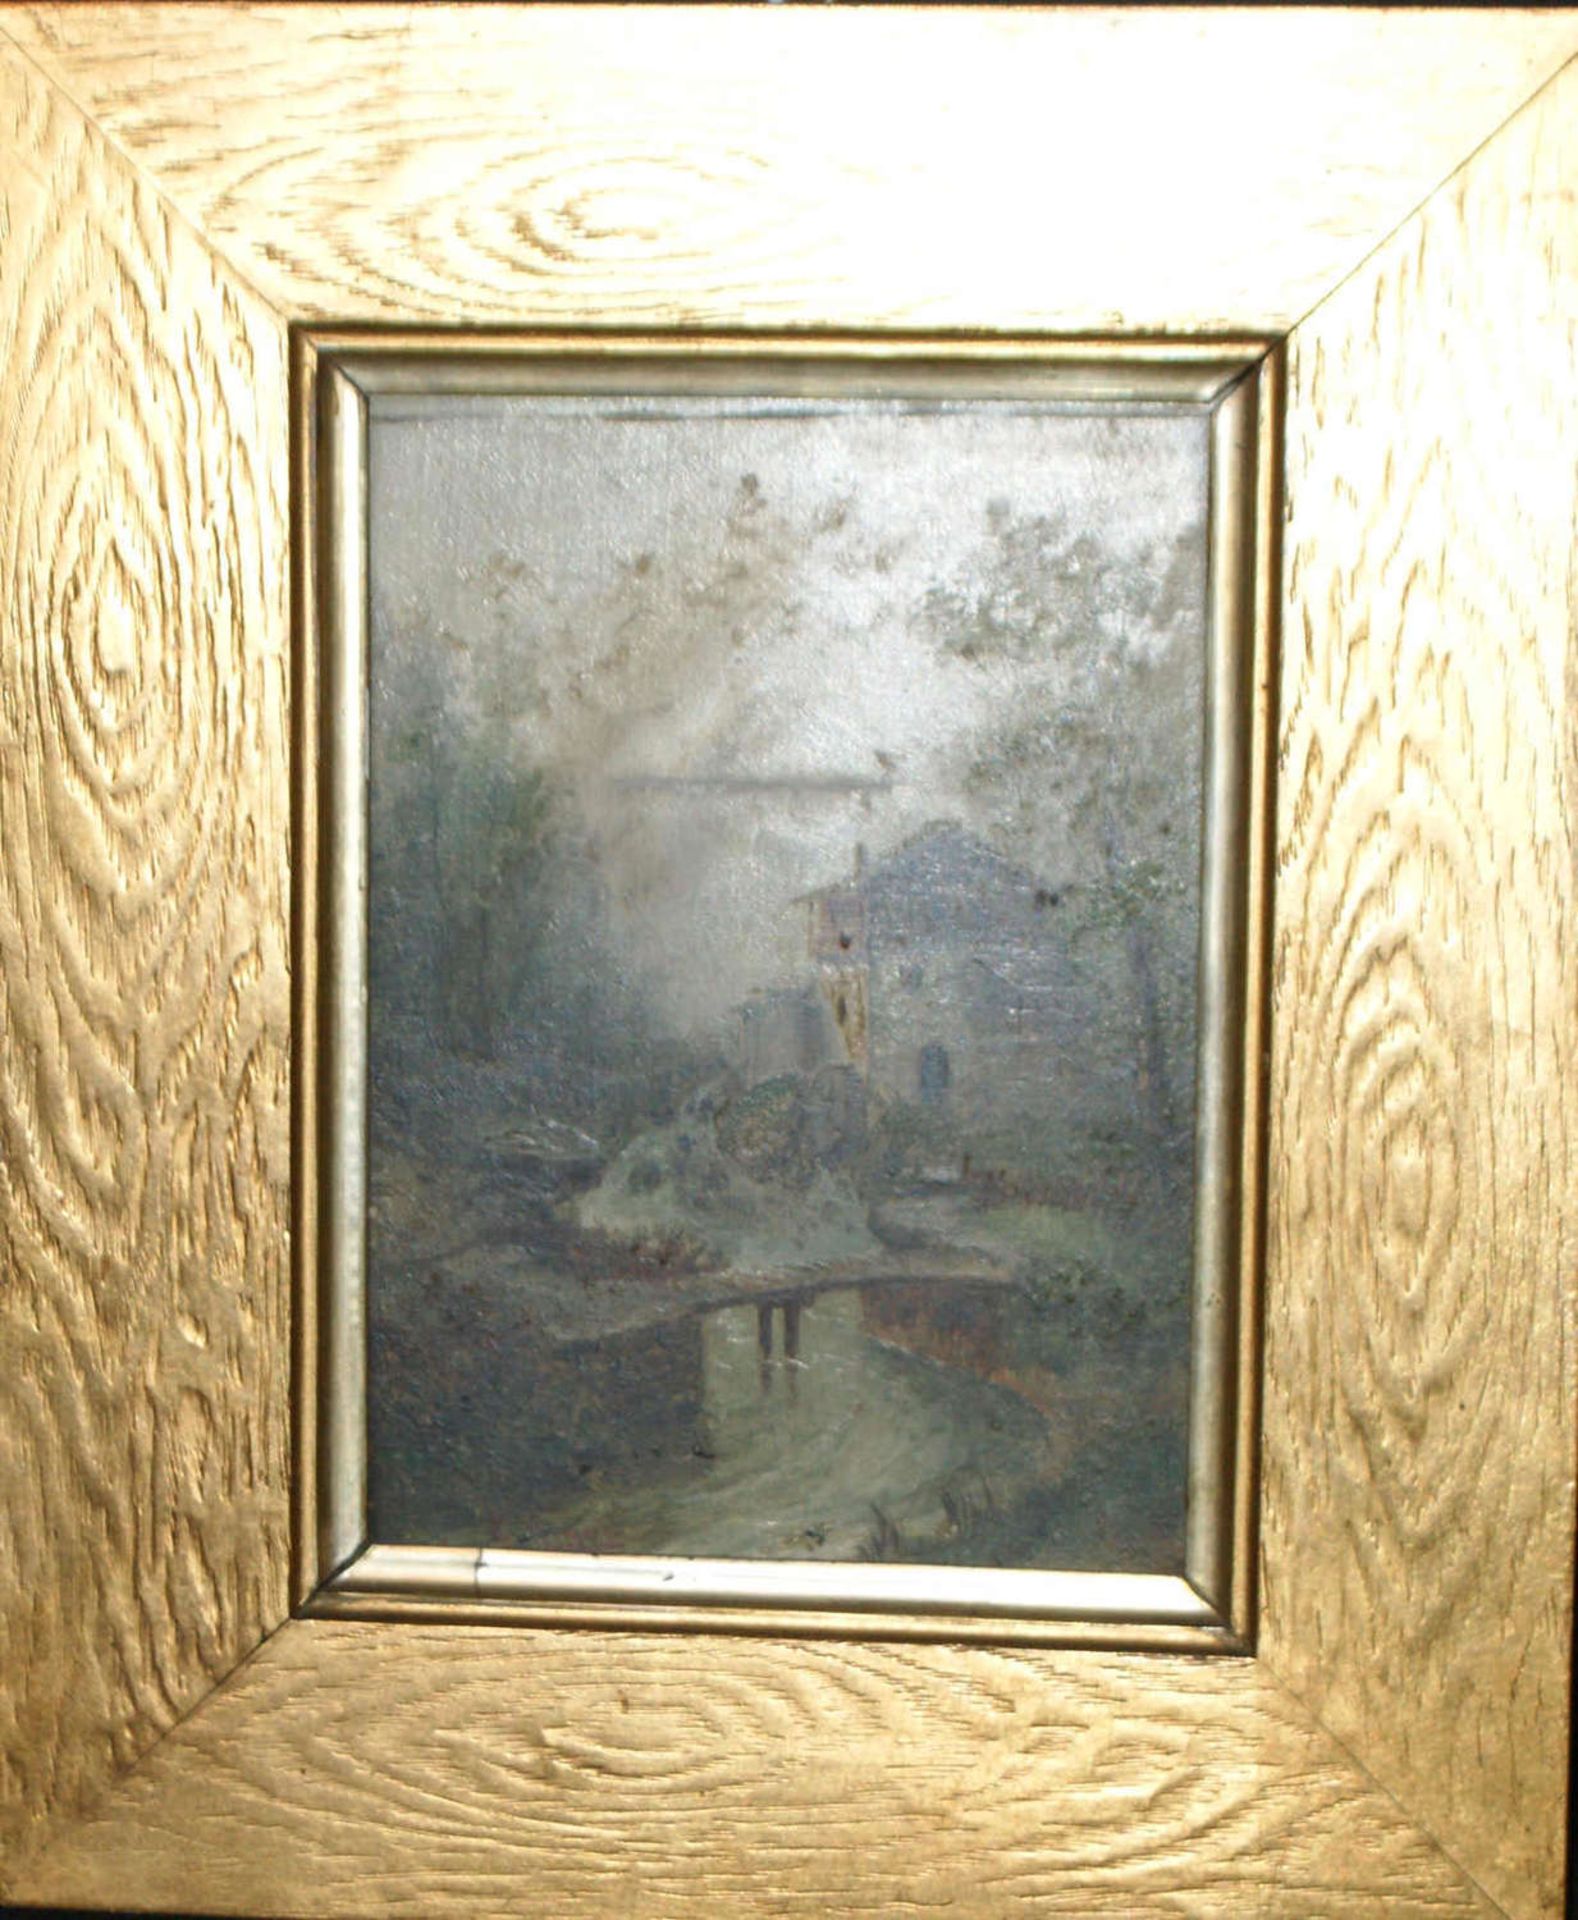 Curt Rüger (1867-1930), Ölgemälde auf Holz, bezeichnet "Aus dem Berner Oberländle", im altem Rahmen.